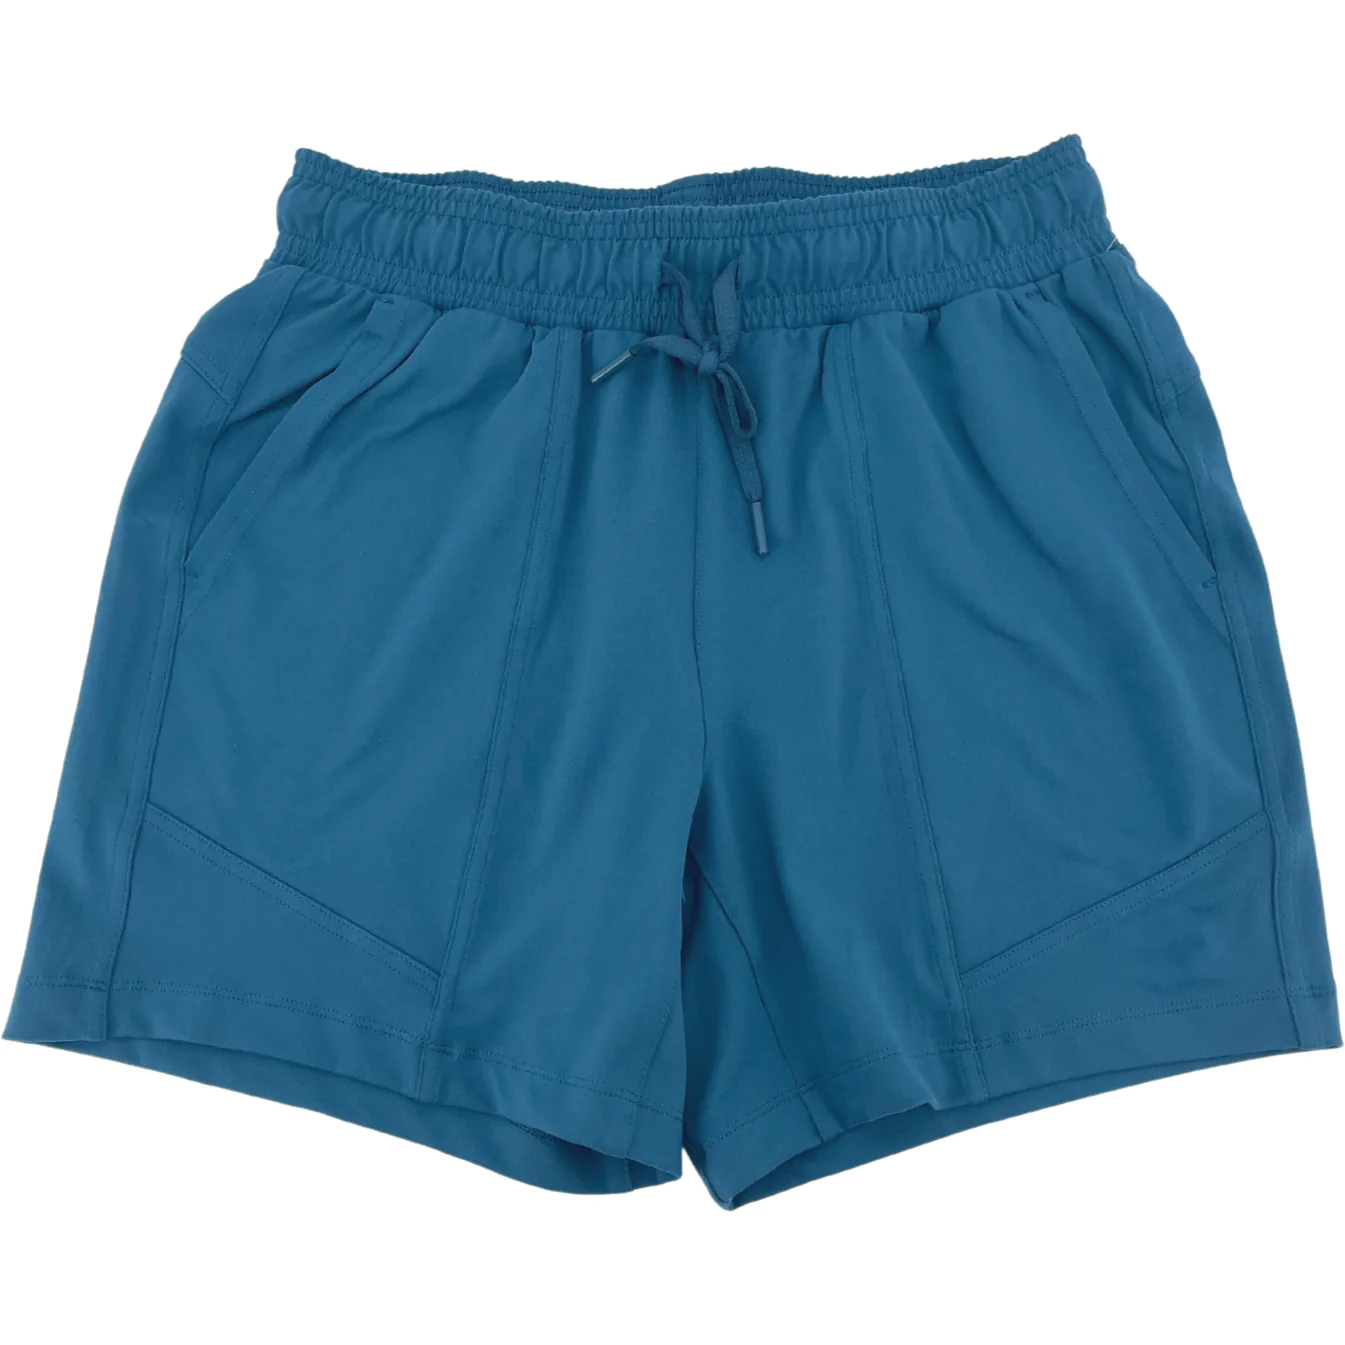 Mondetta Women's Shorts / Jogger Shorts / Activewear / Blue / Various Sizes